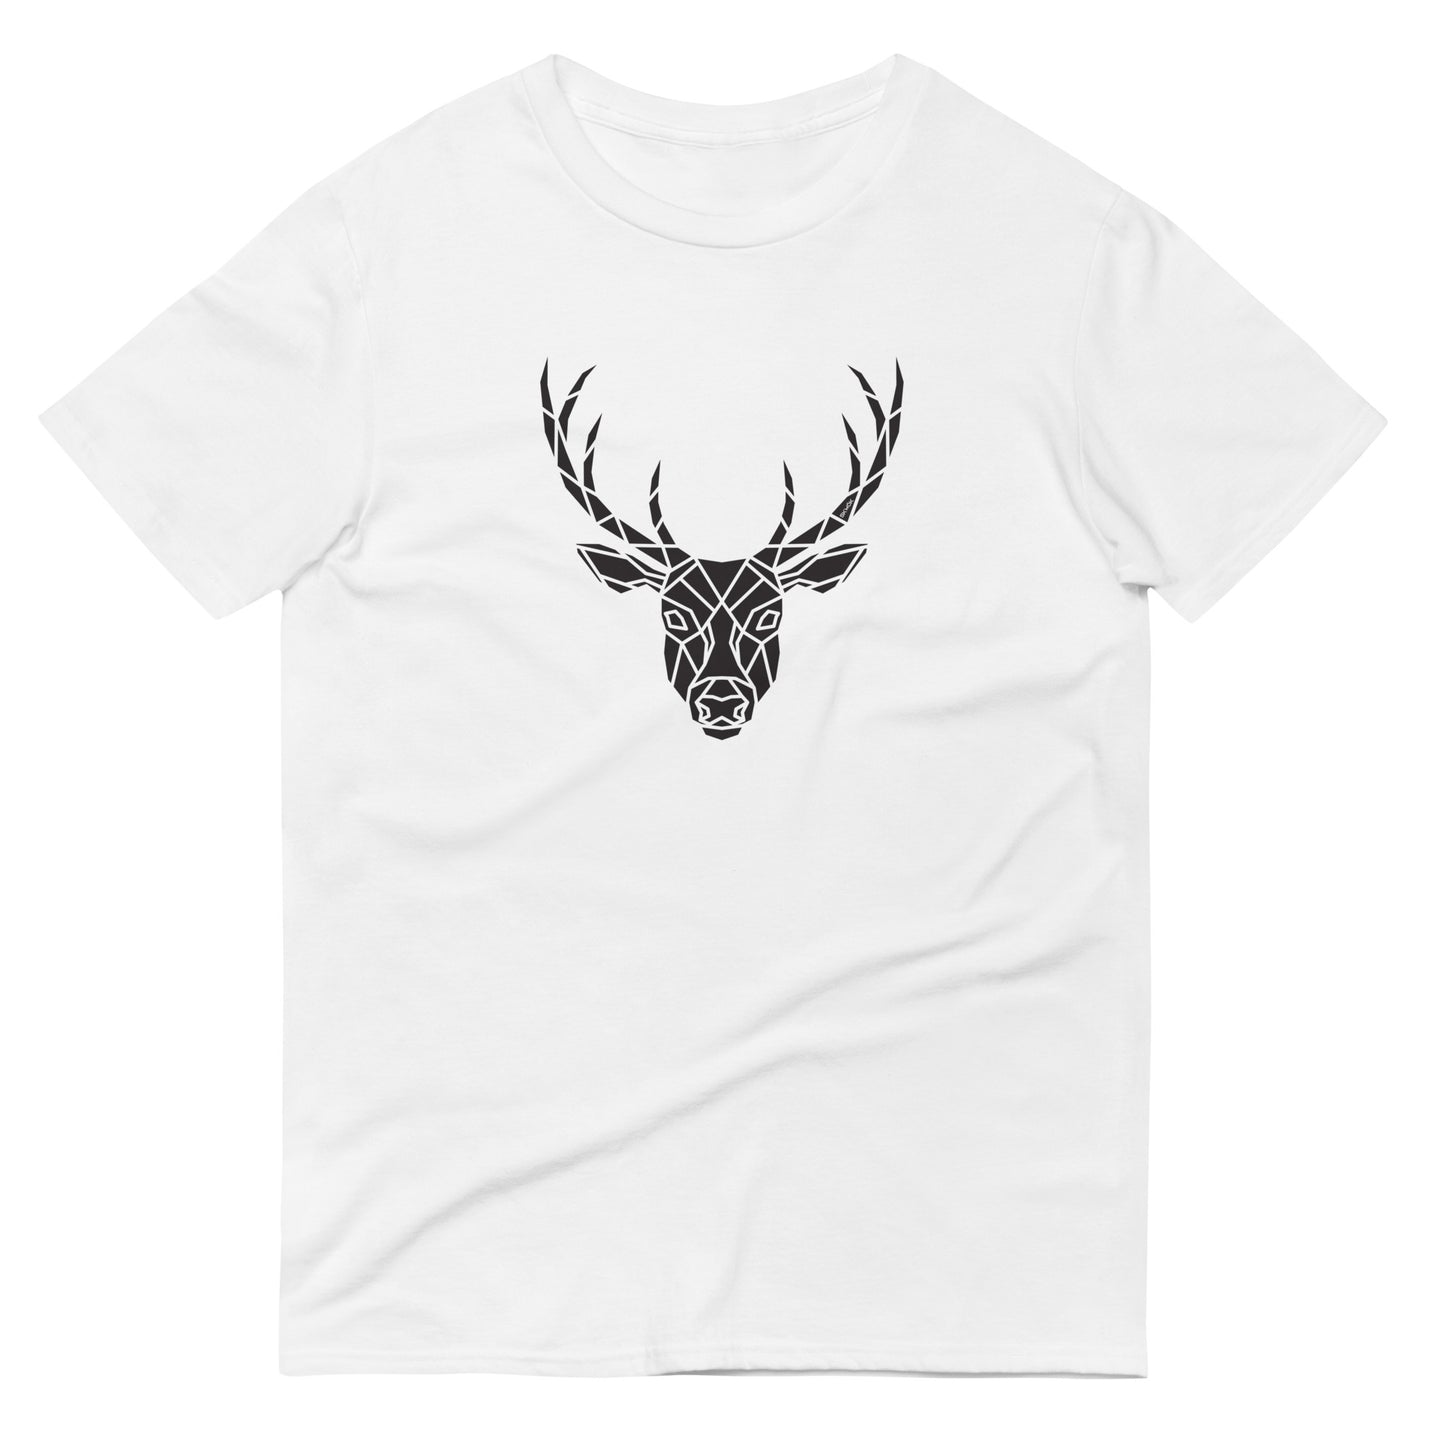 Skwok Brand / #23 / T-shirt / Big Buck